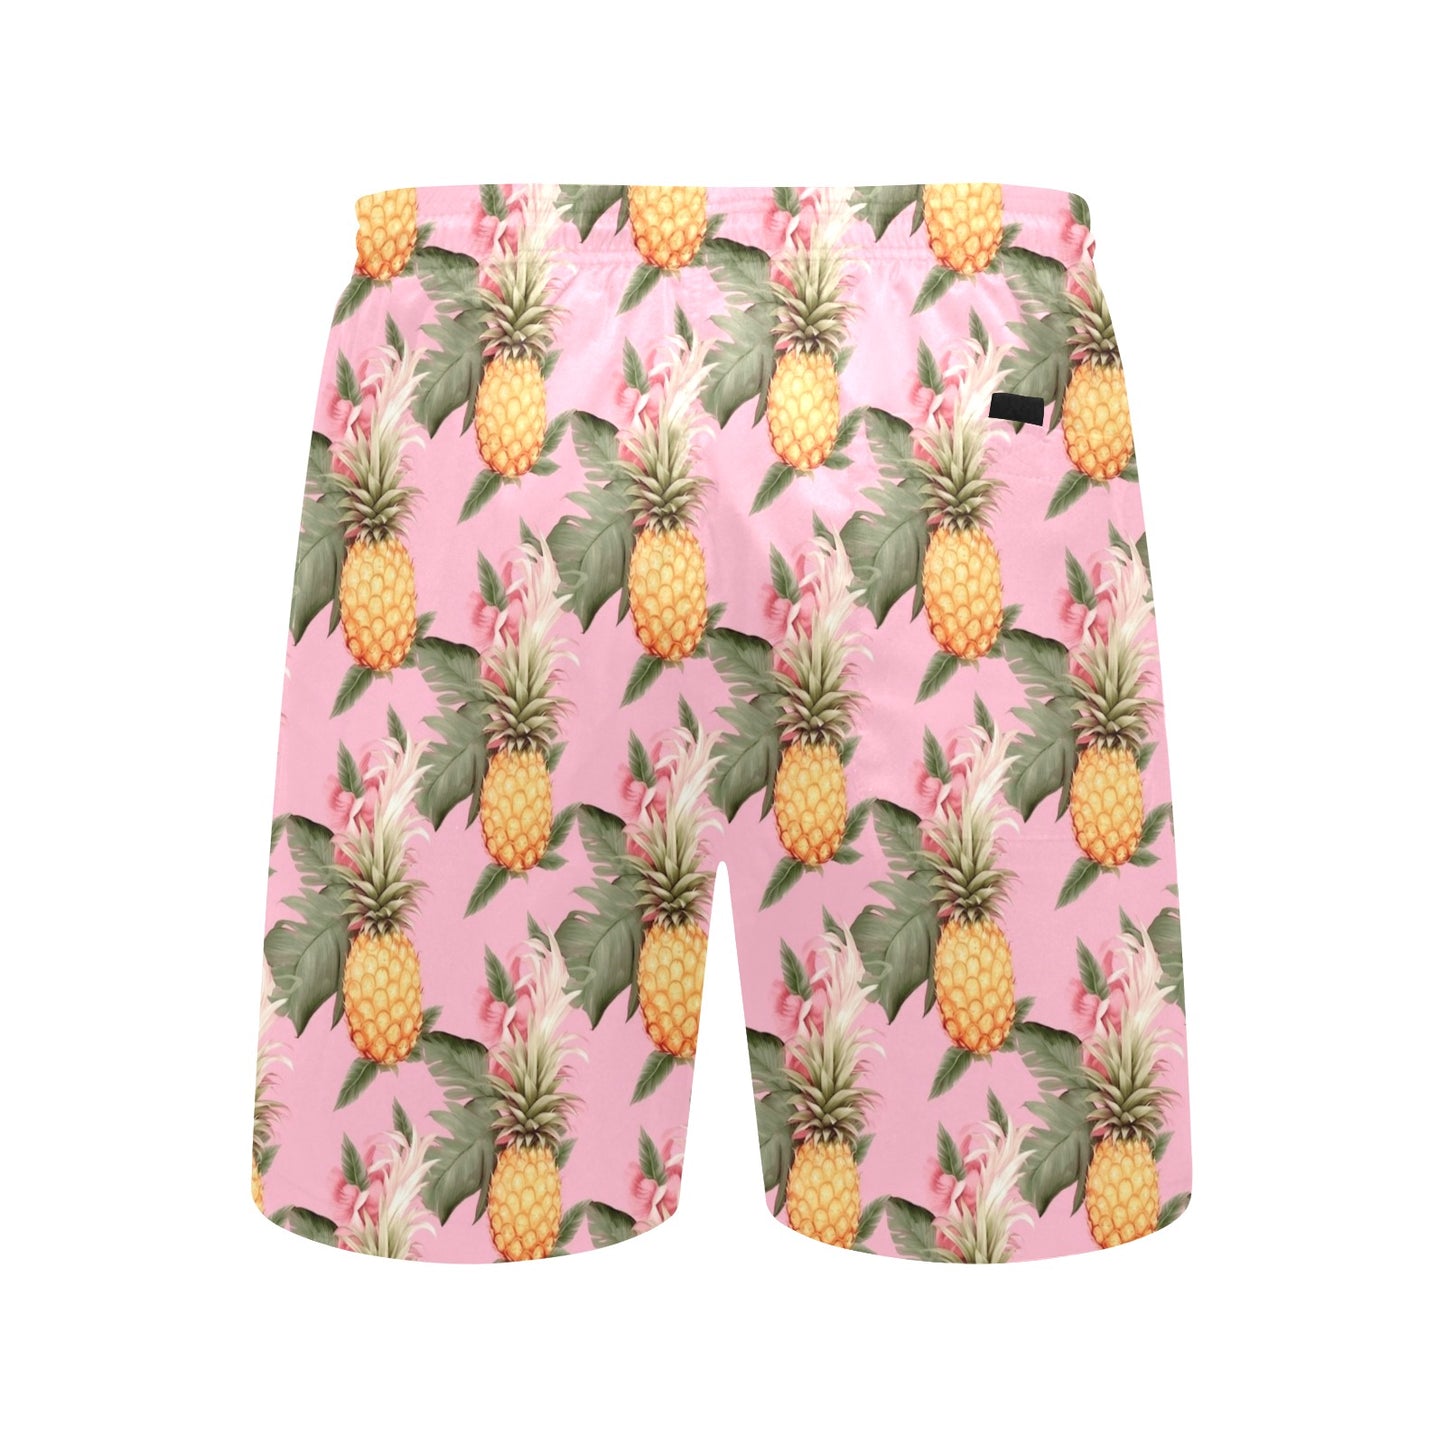 Pink Pineapple Men Swim Trunks, Tropical Mid Length Shorts Beach Surf Swimwear Male Guys Back Pockets Mesh Lining Drawstring Bathing Suit